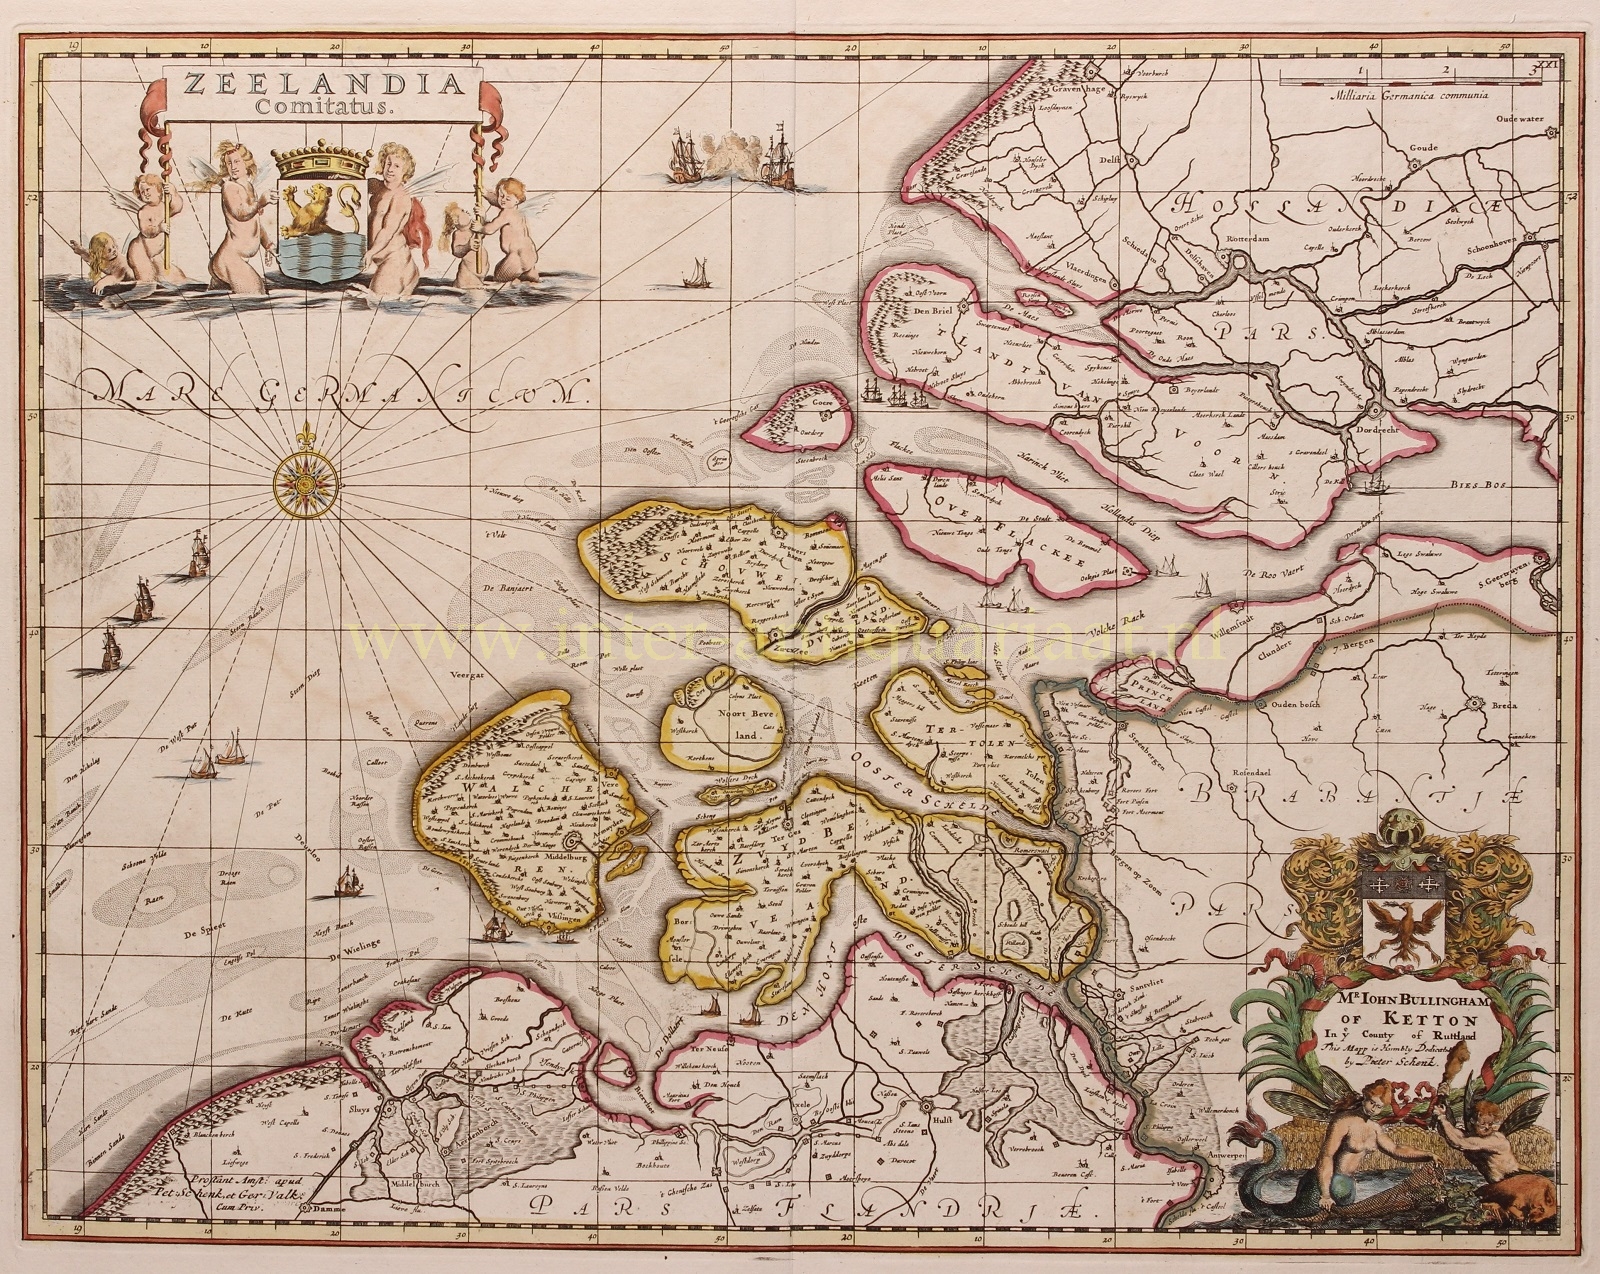  - Zeeland - Pieter Schenk and Gerard Valck, c. 1700